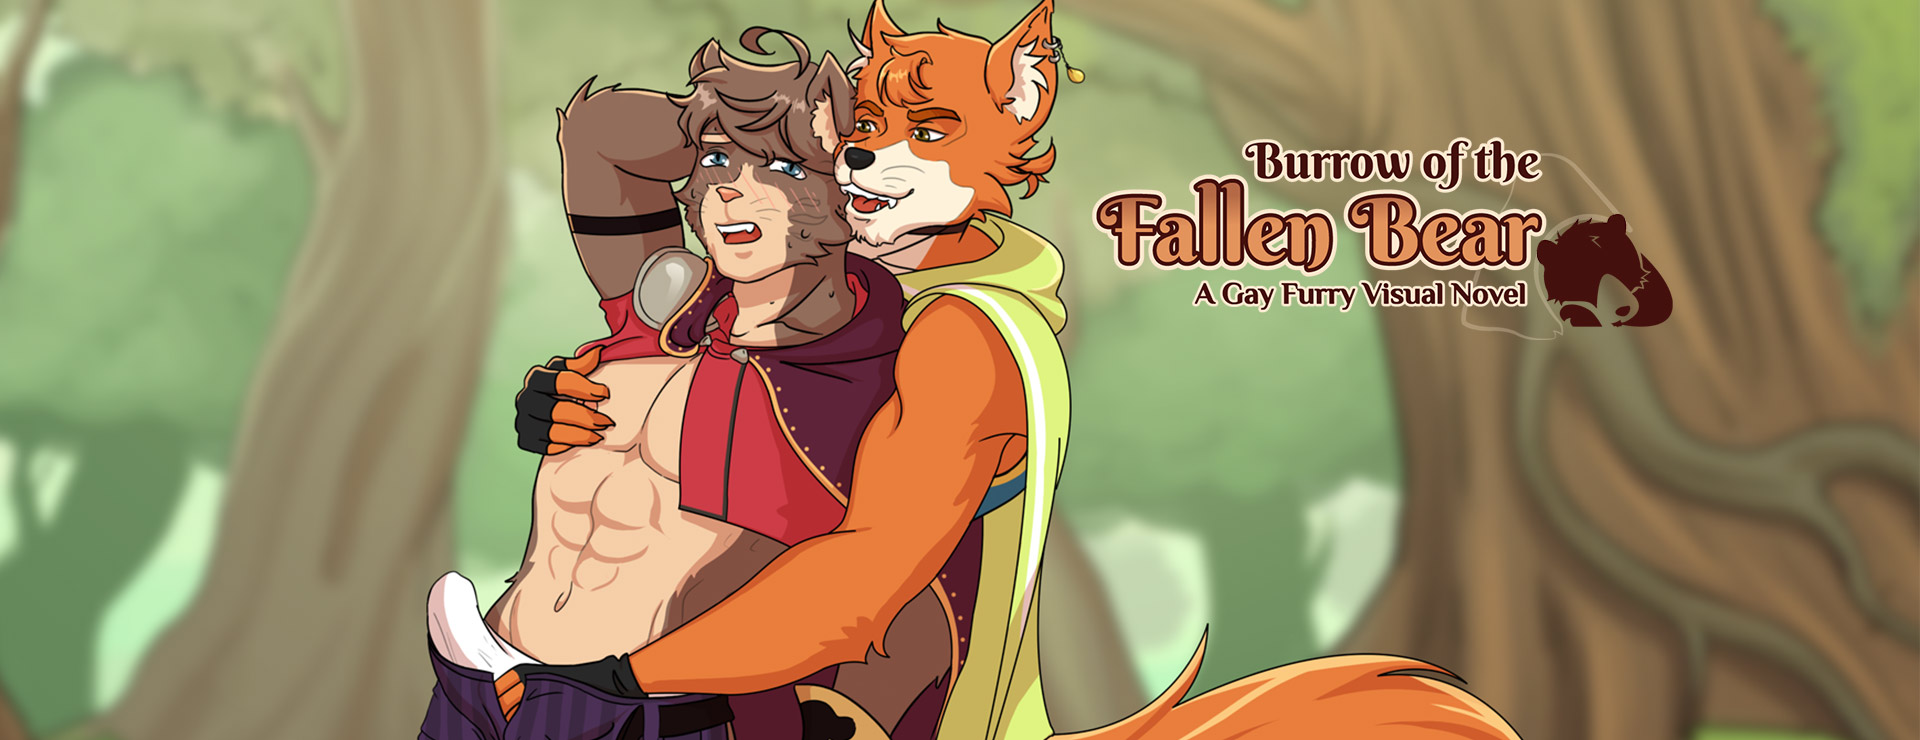 Burrow of the Fallen Bear - Visual Novel Game